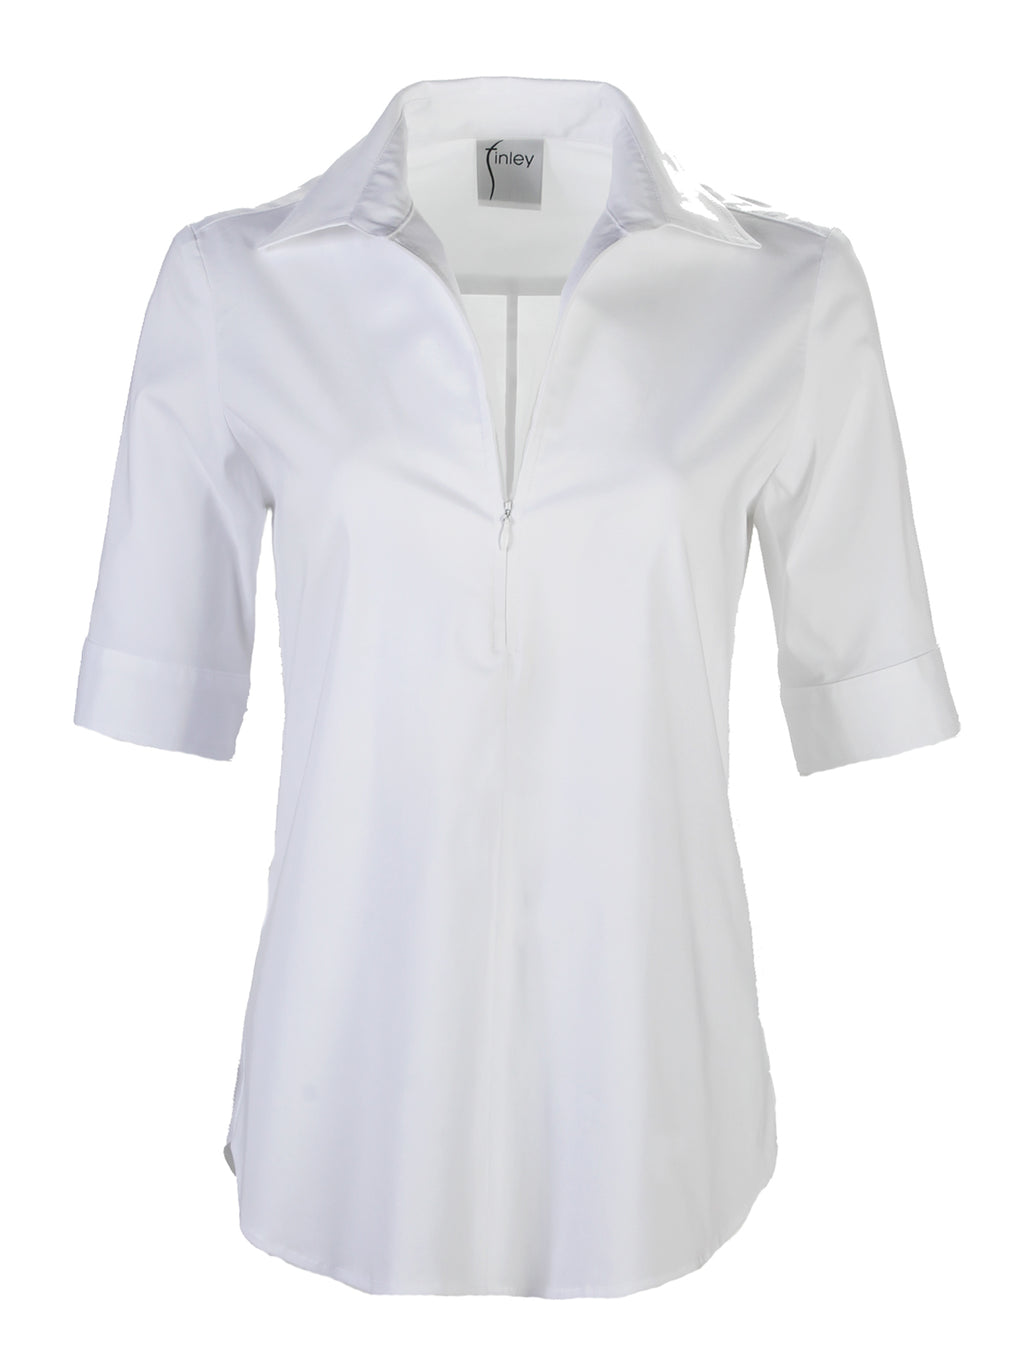 Women's Half Zip White Short Sleeve Shirt | Finley Shirts